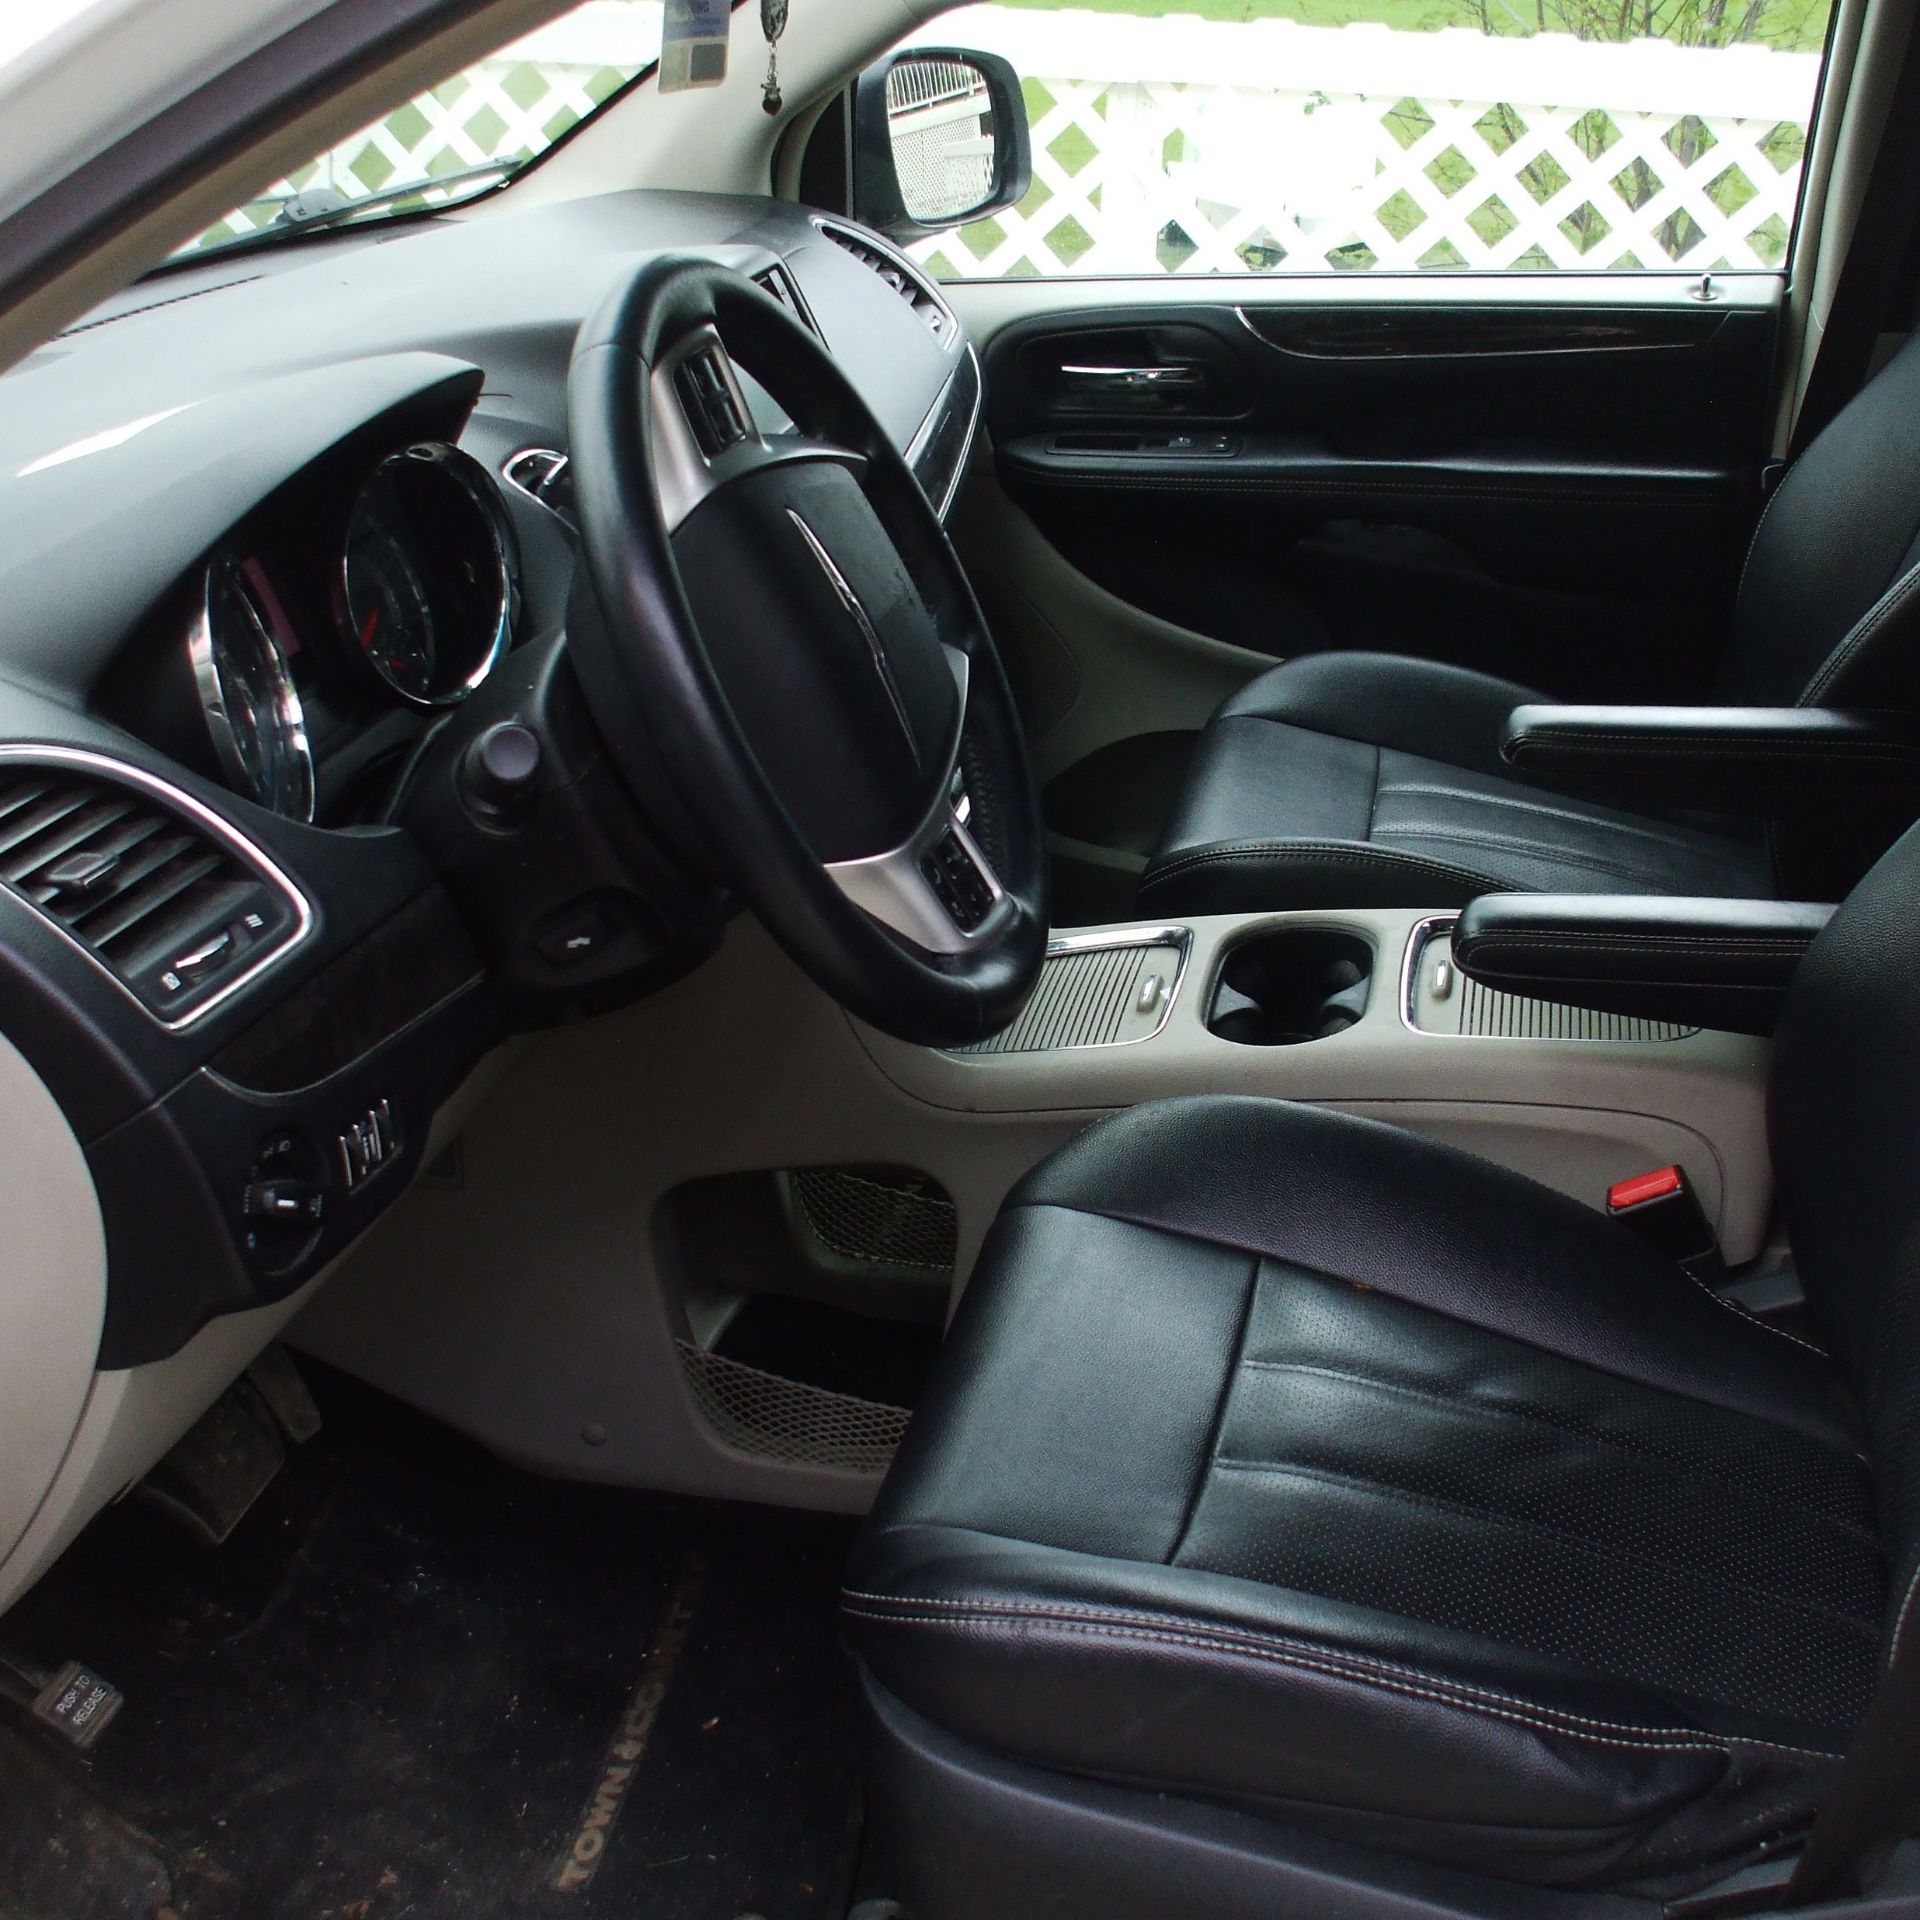 2014 Chrysler Town & Country Van, fully loaded, white, 282453 km - Image 3 of 7